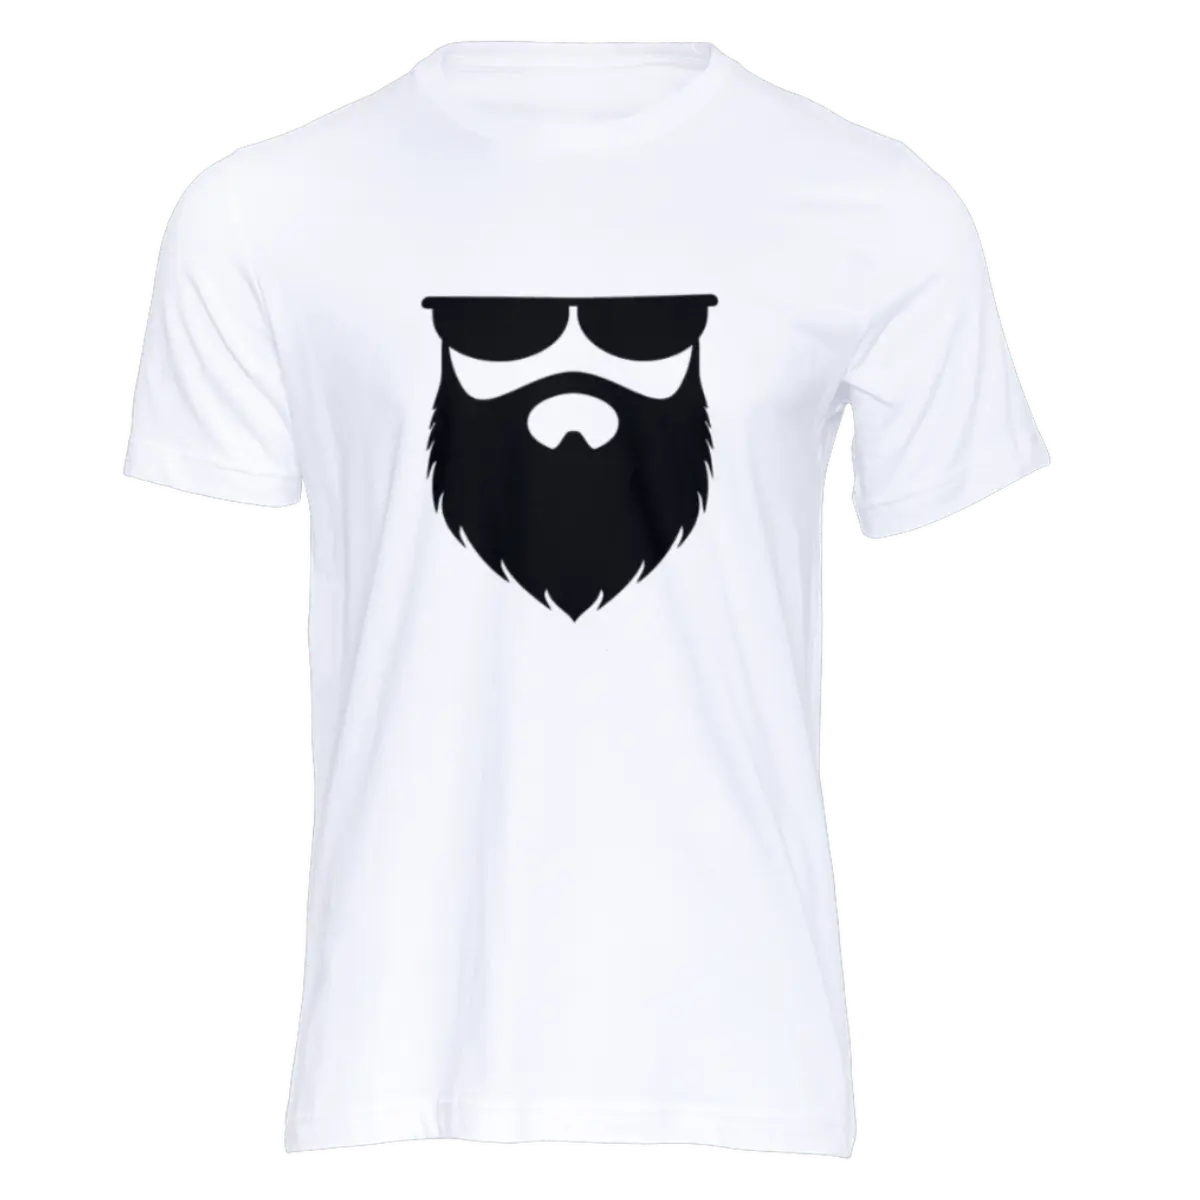 OG No Shave Life Beard White T-Shirt|T-Shirt